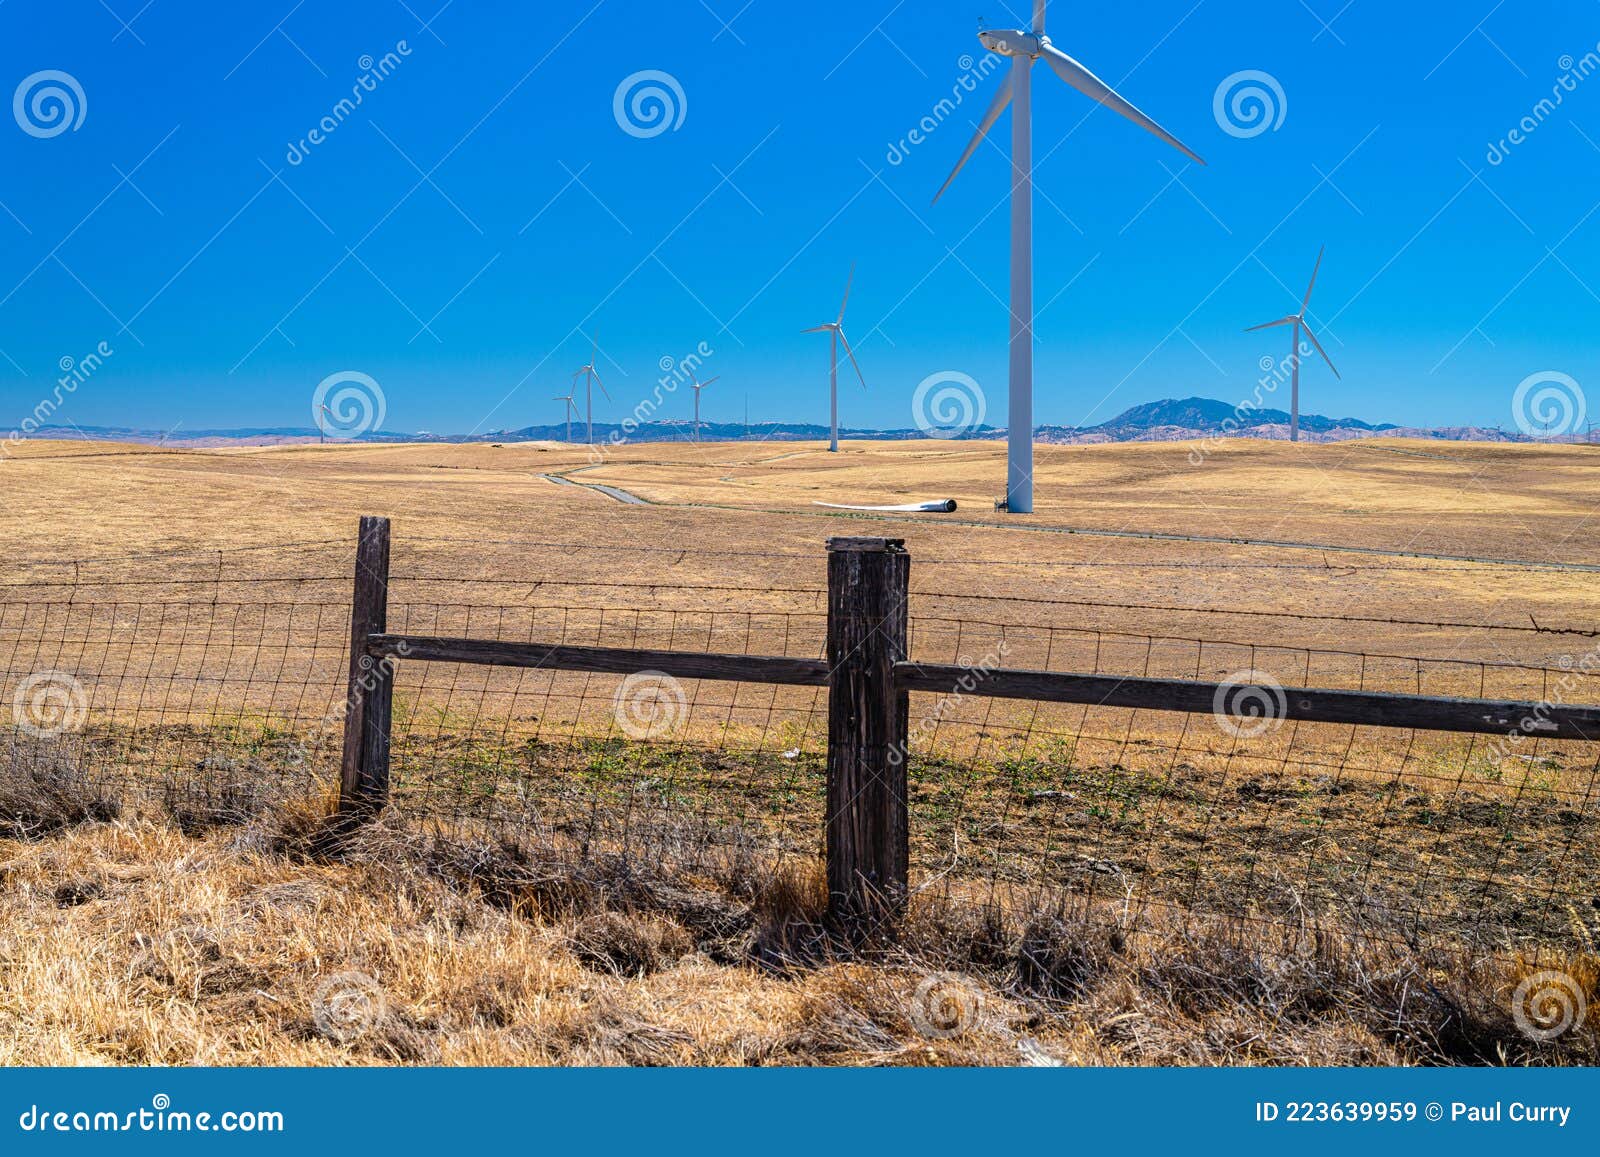 solano county wind turbines farm